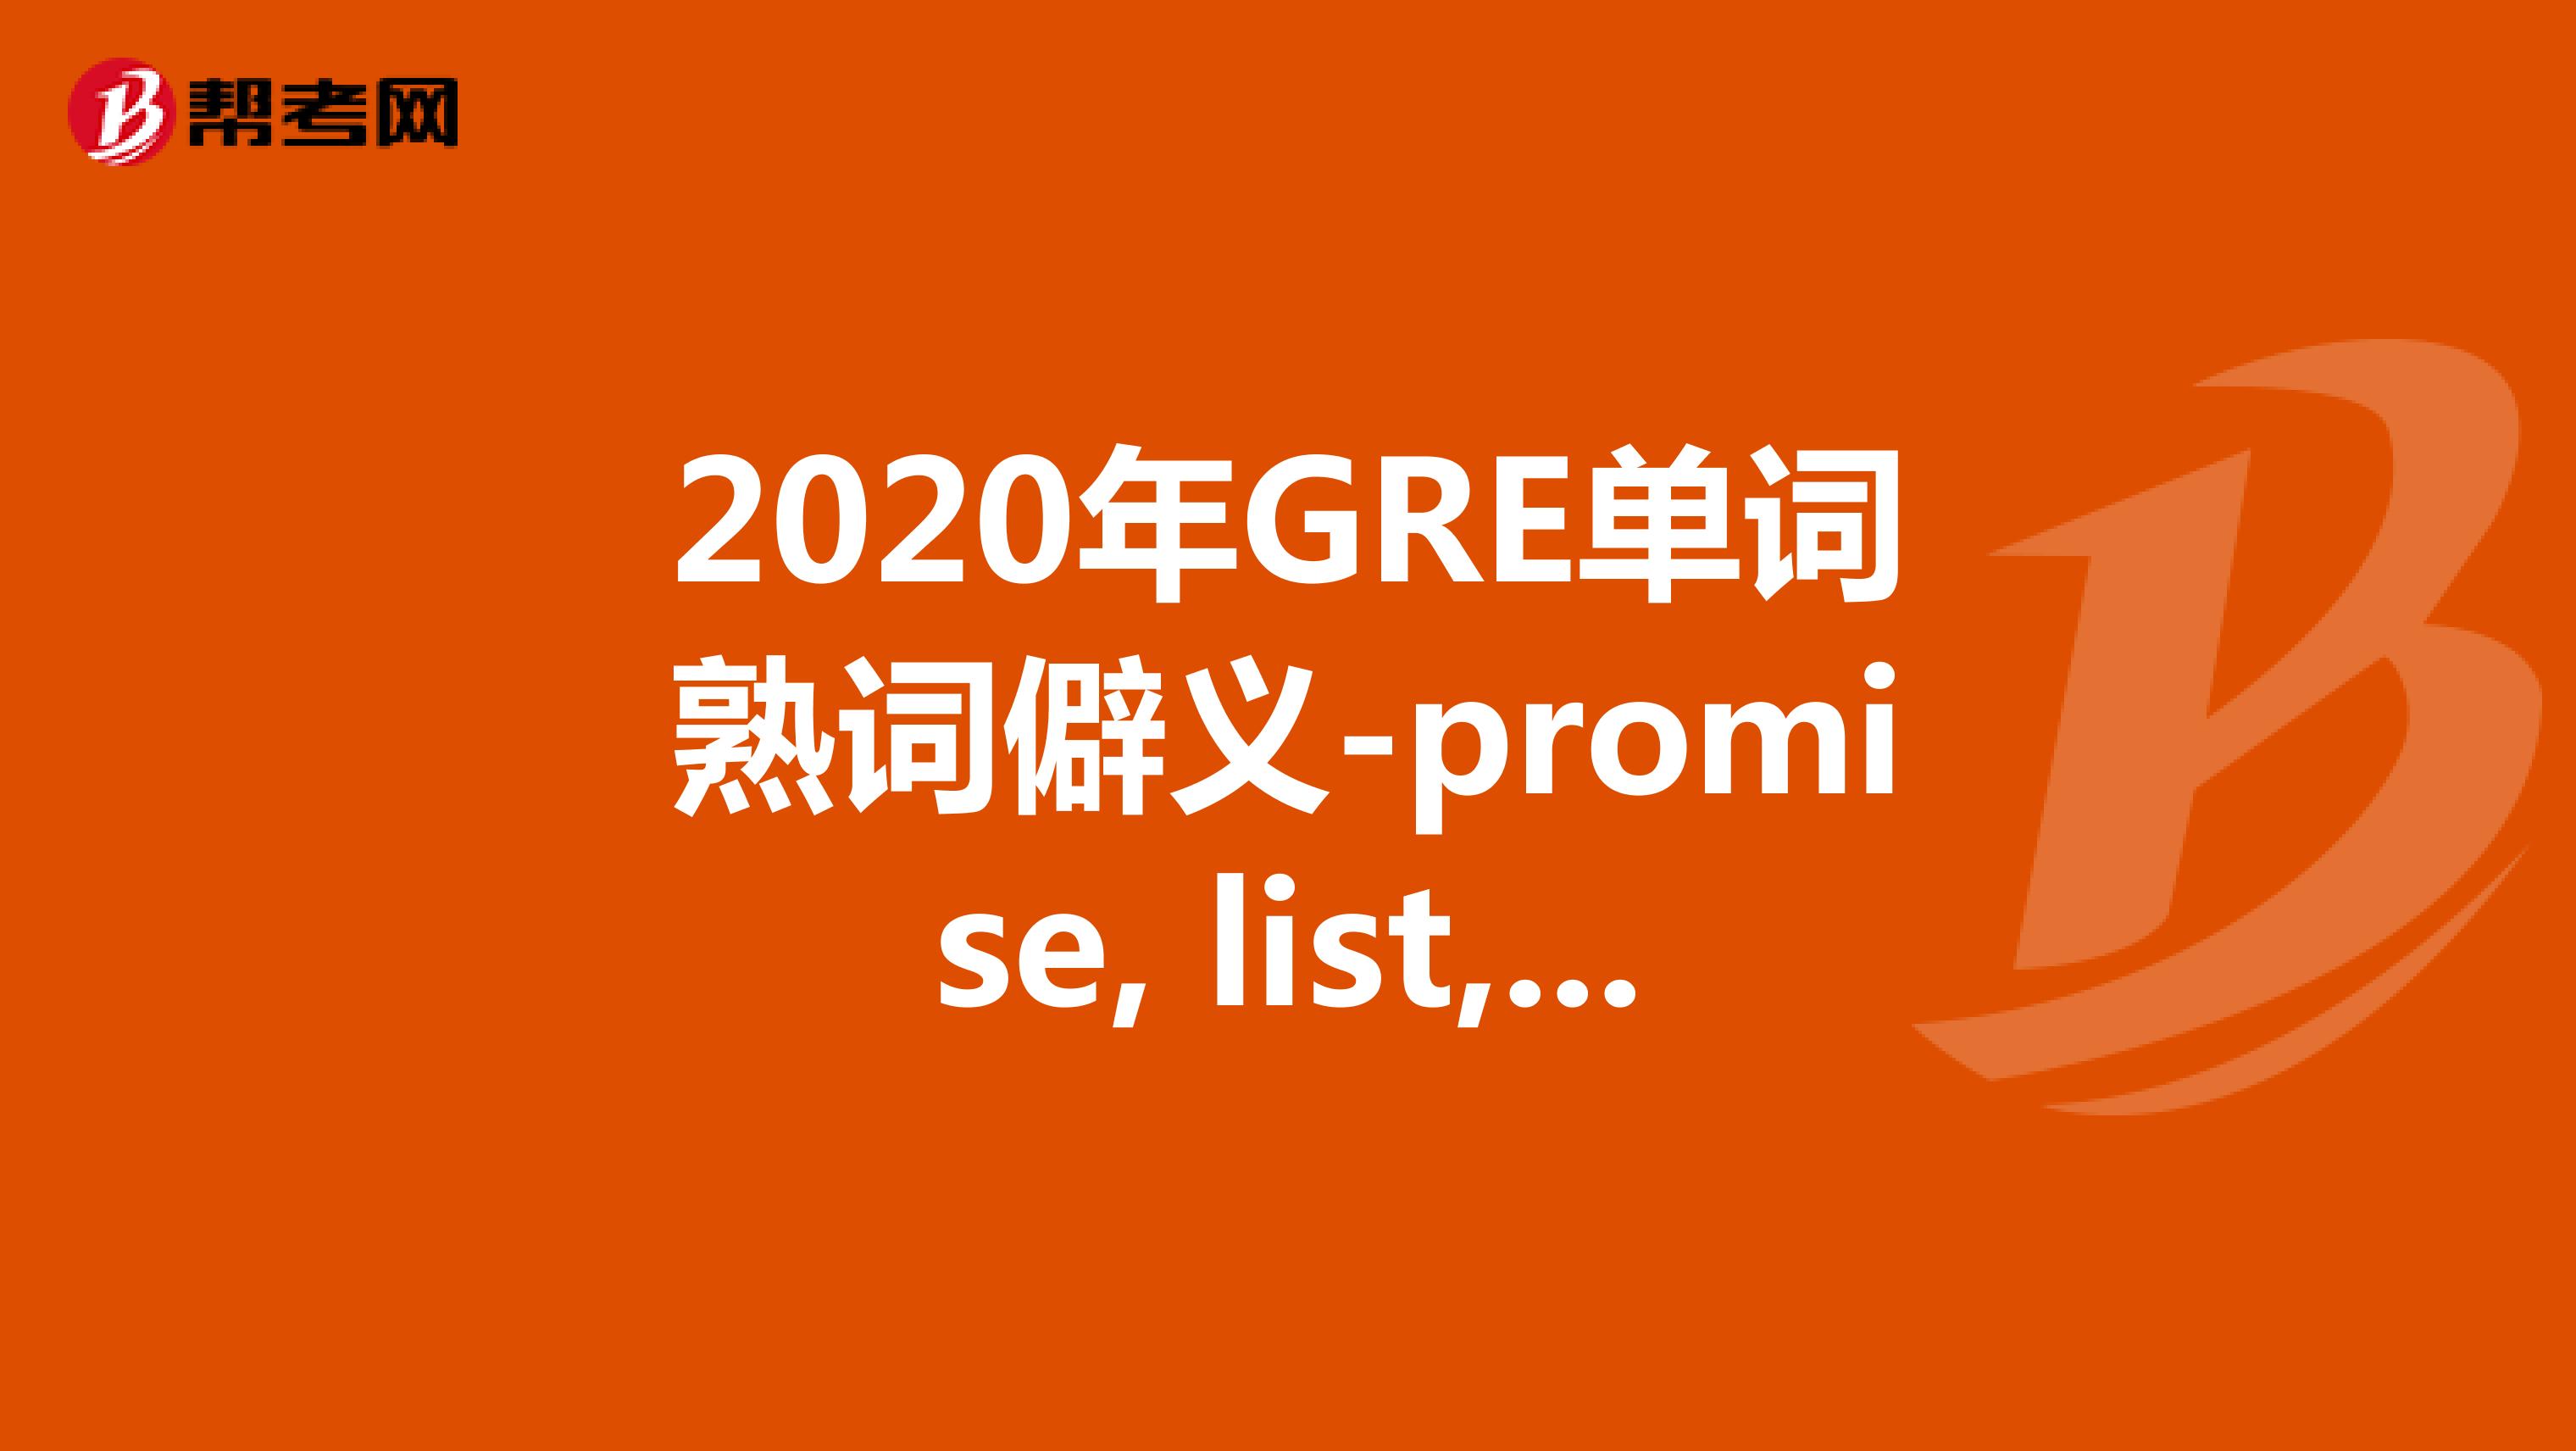 2020年GRE单词熟词僻义-promise, list, provoke